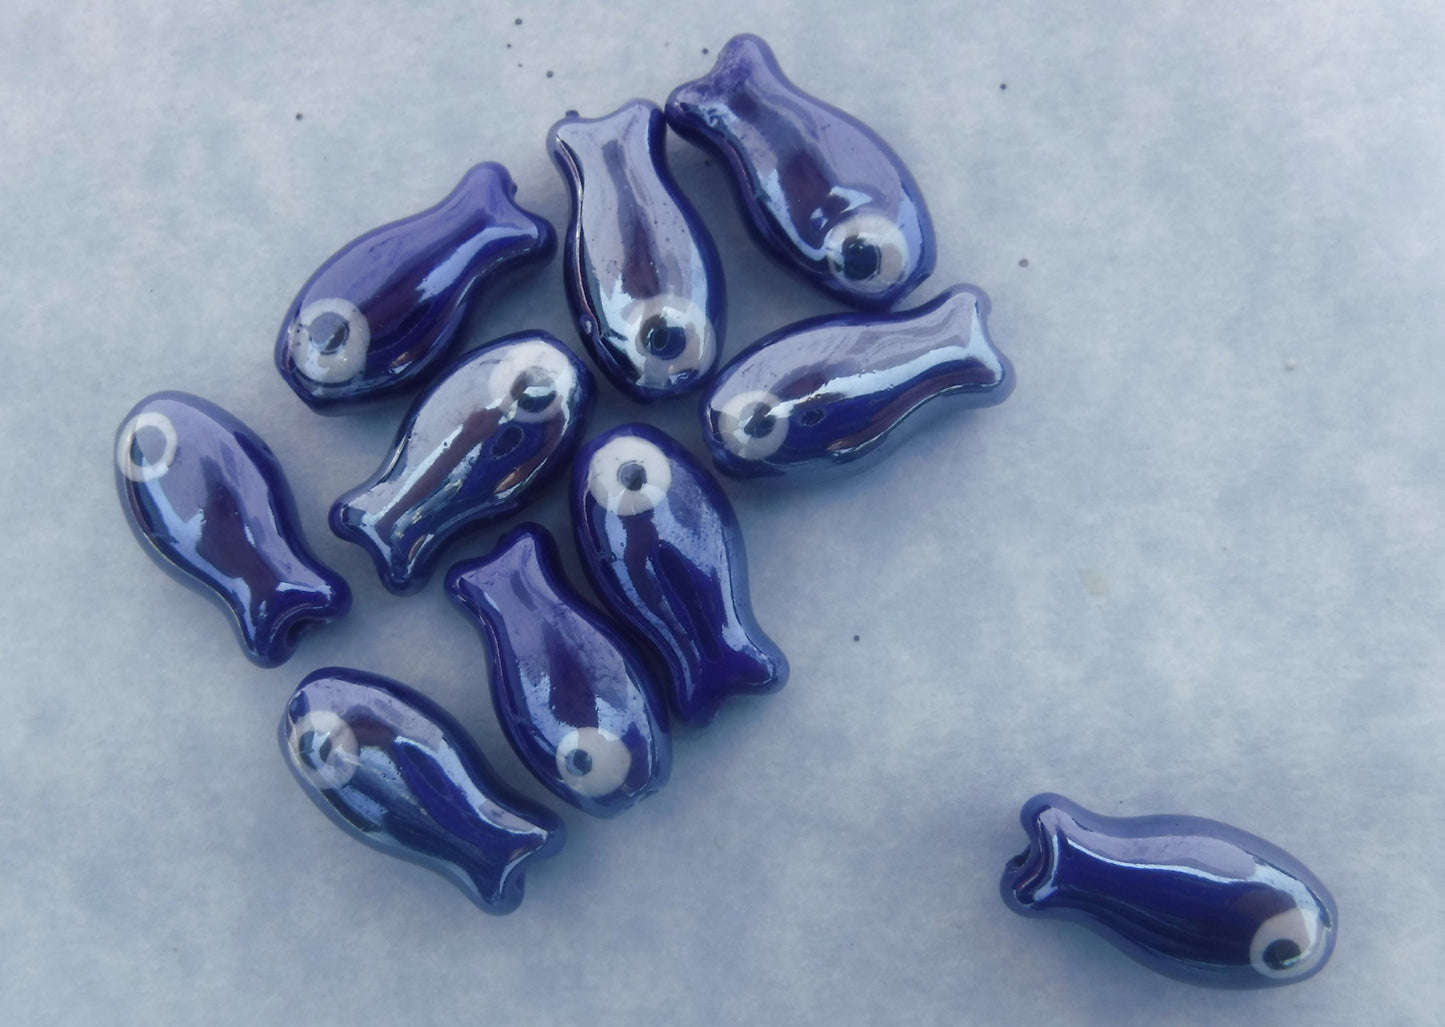 Dark Blue Fish Beads - Ceramic Mosaic Tiles - Small Fish Beads